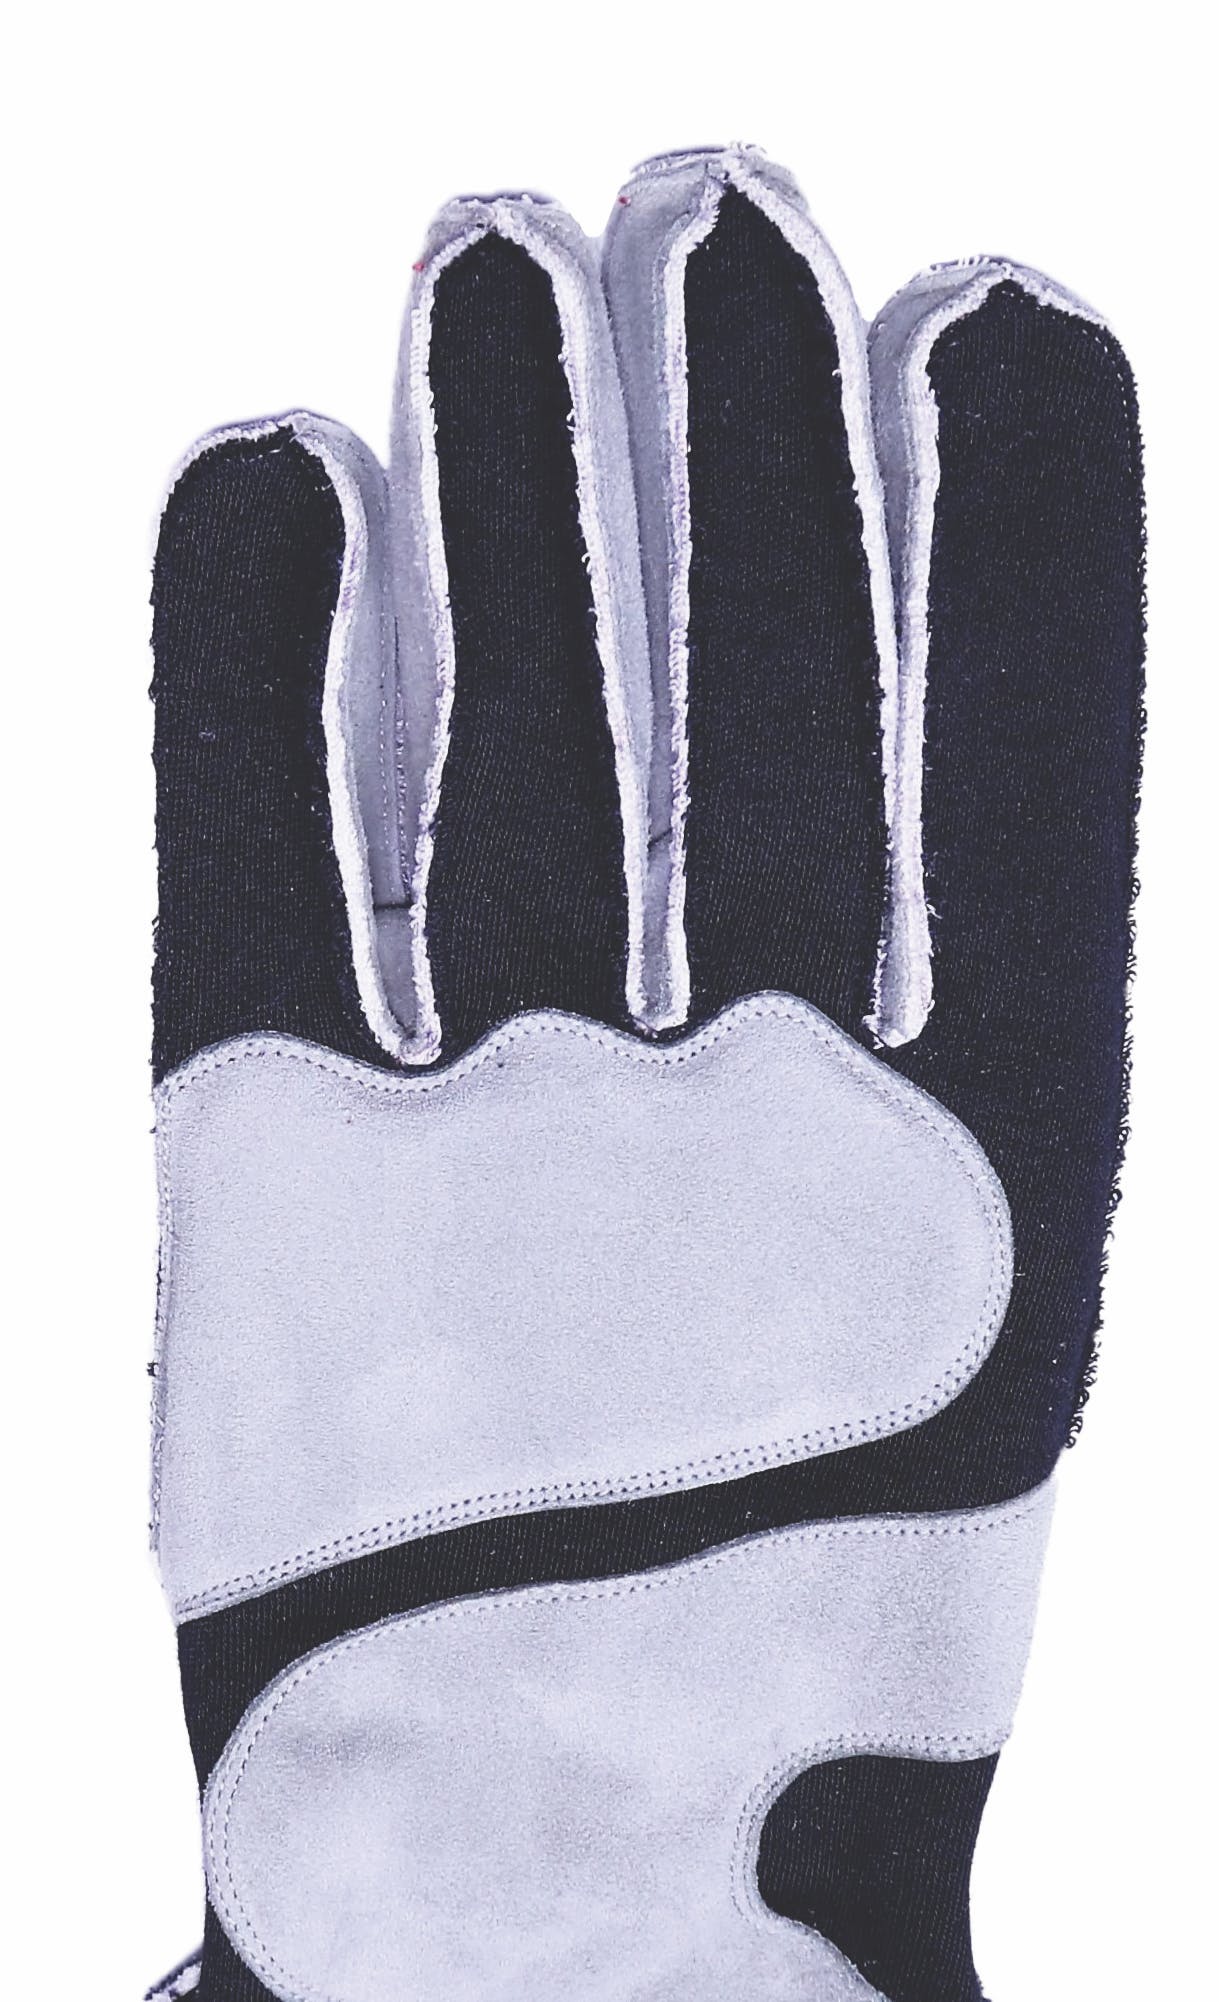 RaceQuip 356603 SFI-5 Angle-Cut Cuffed Racing Gloves (Gray/Black, Medium)